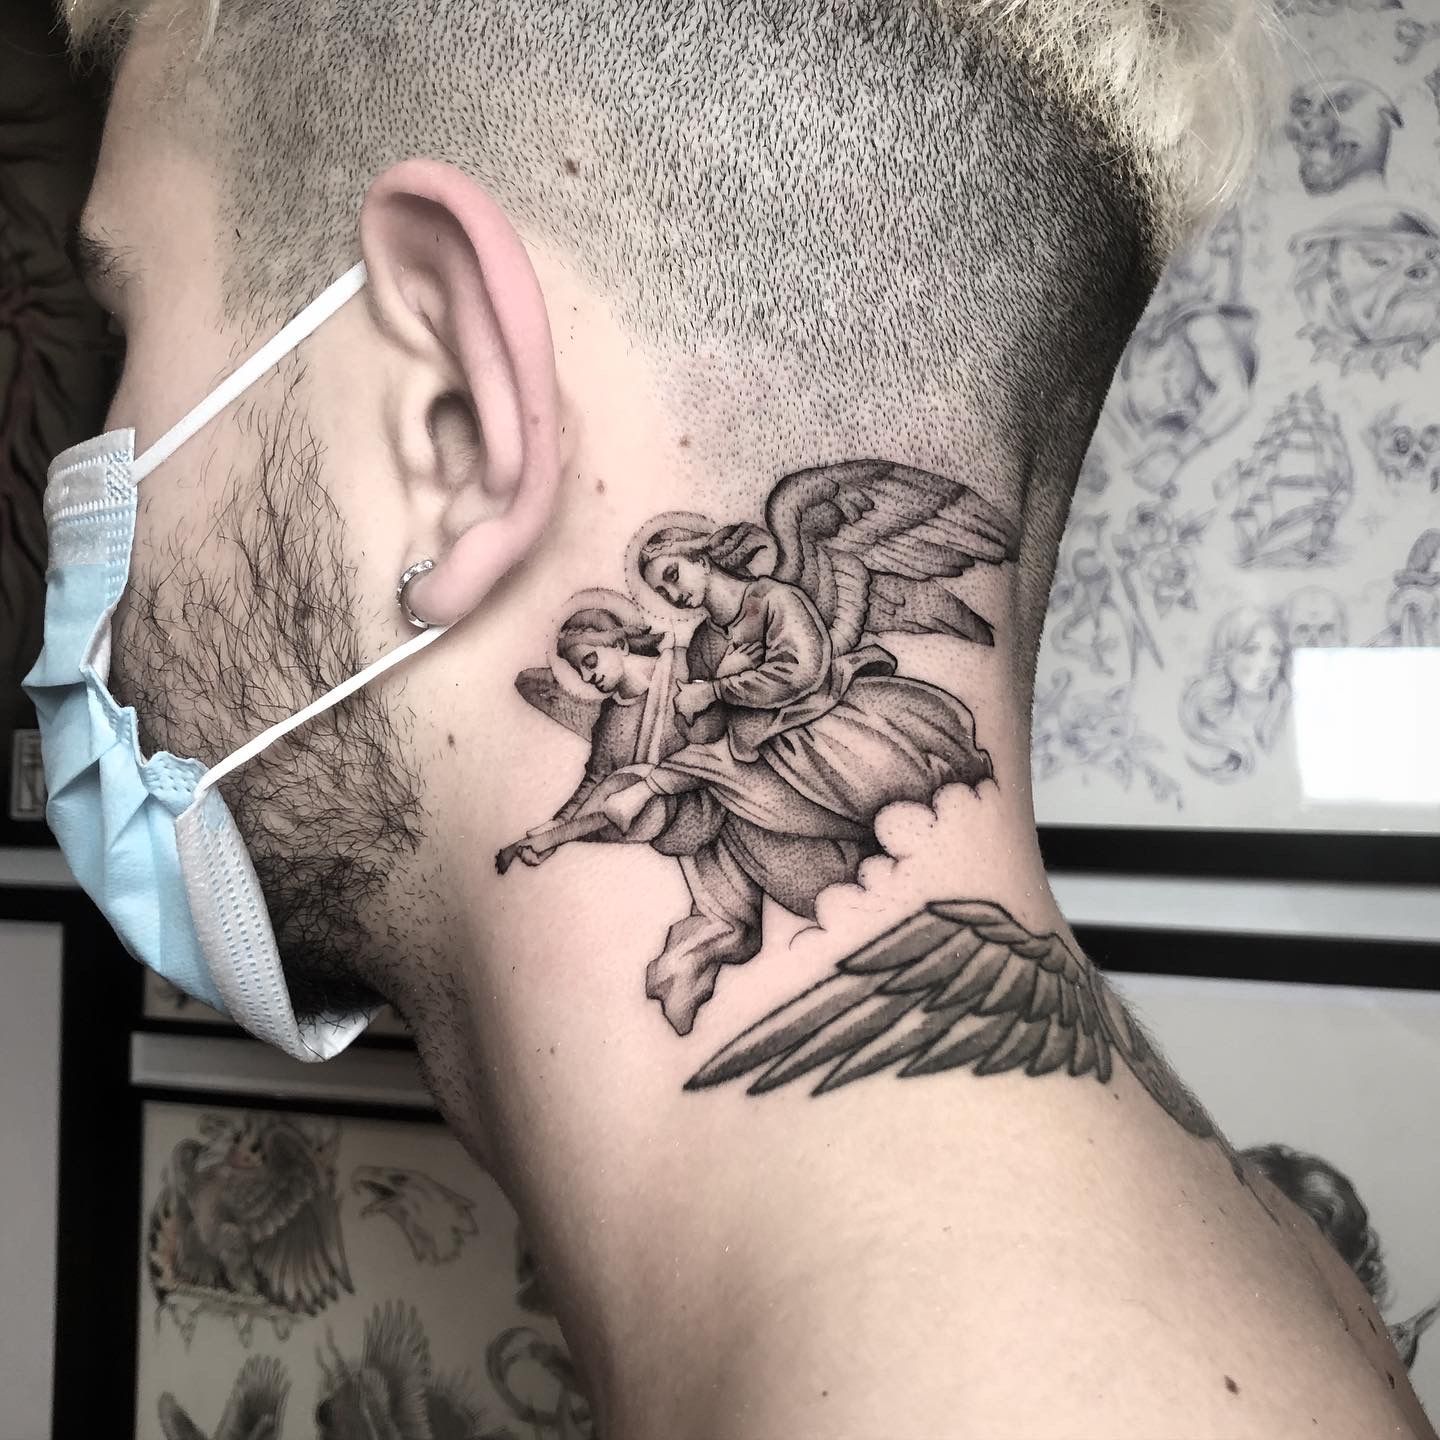 Angel neck tattoo    follow exclusiveblckart   credit bktattooer  sketchtattoos blacktattOoart linearttattoo  Tanjiro Sama  exclusiveblckart on Instagram